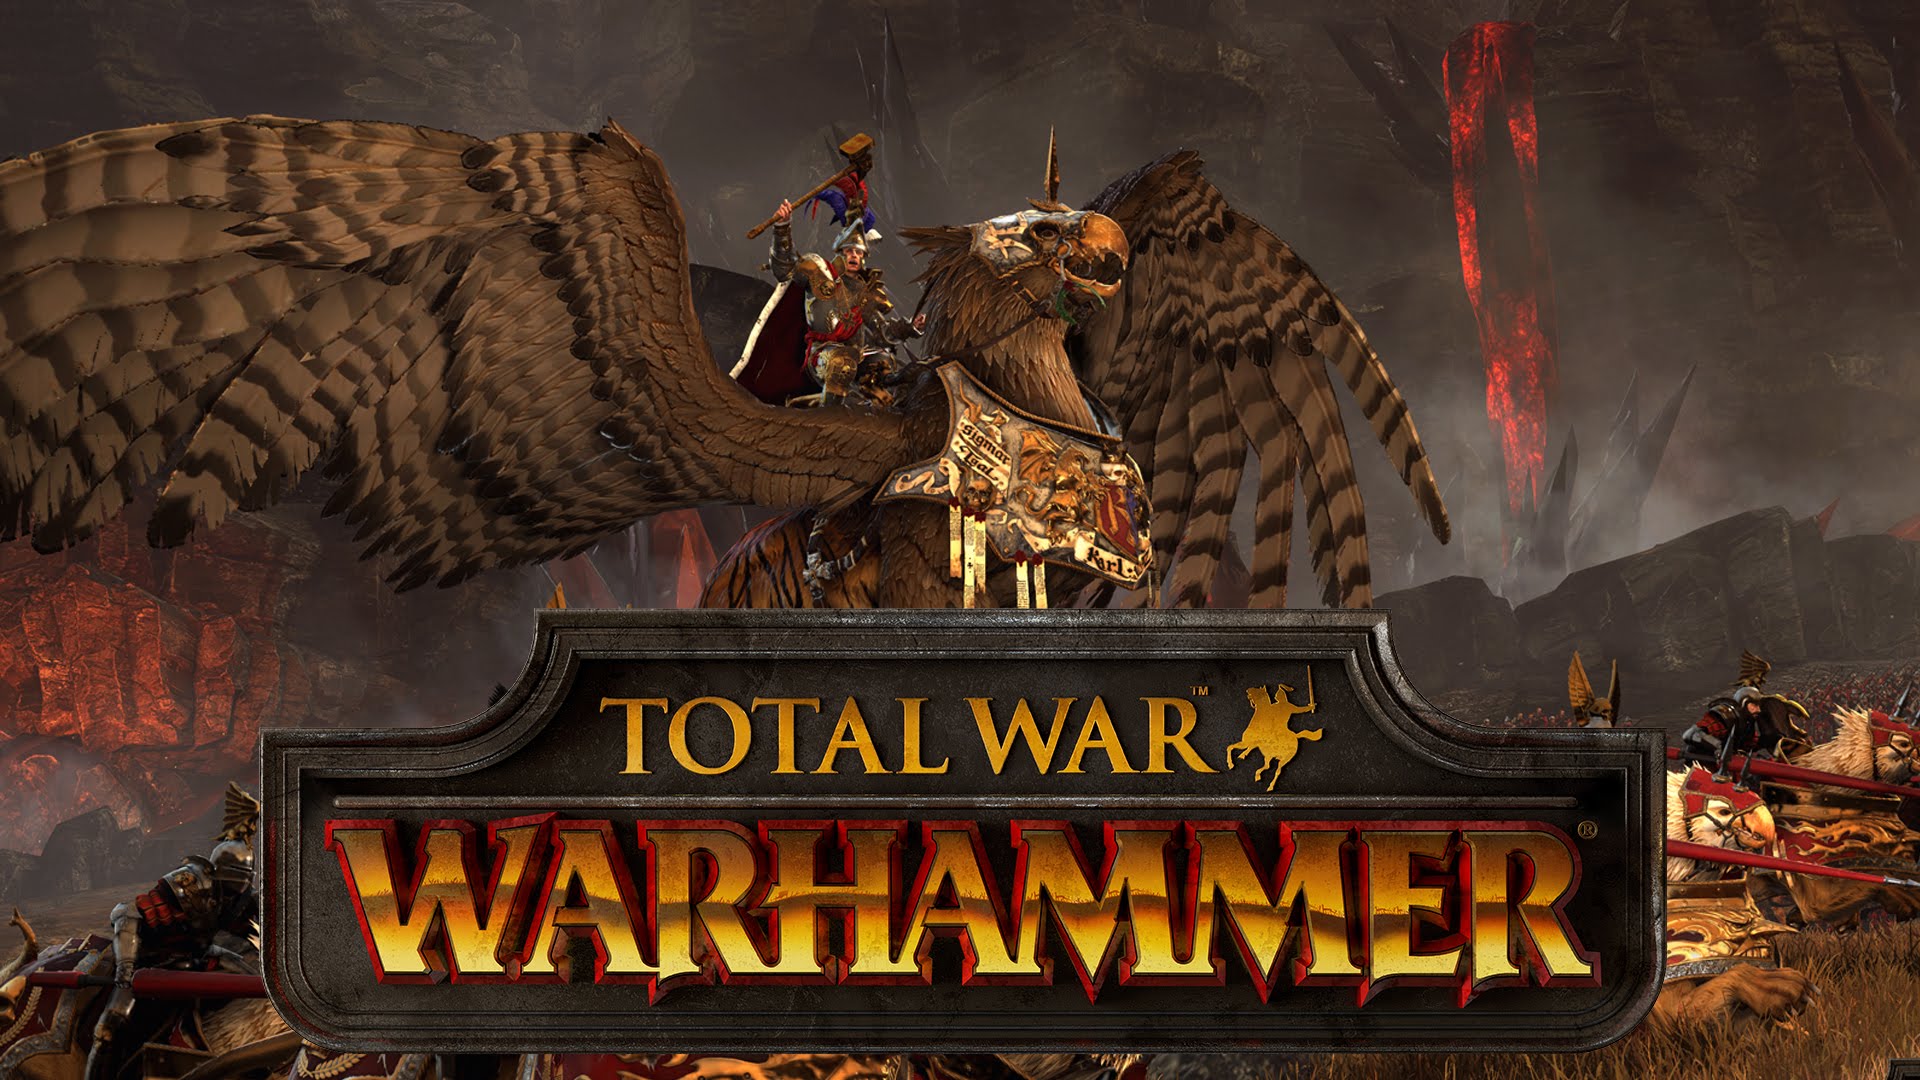 warhammer total war wallpaper,action adventure game,pc game,games,screenshot,fictional character